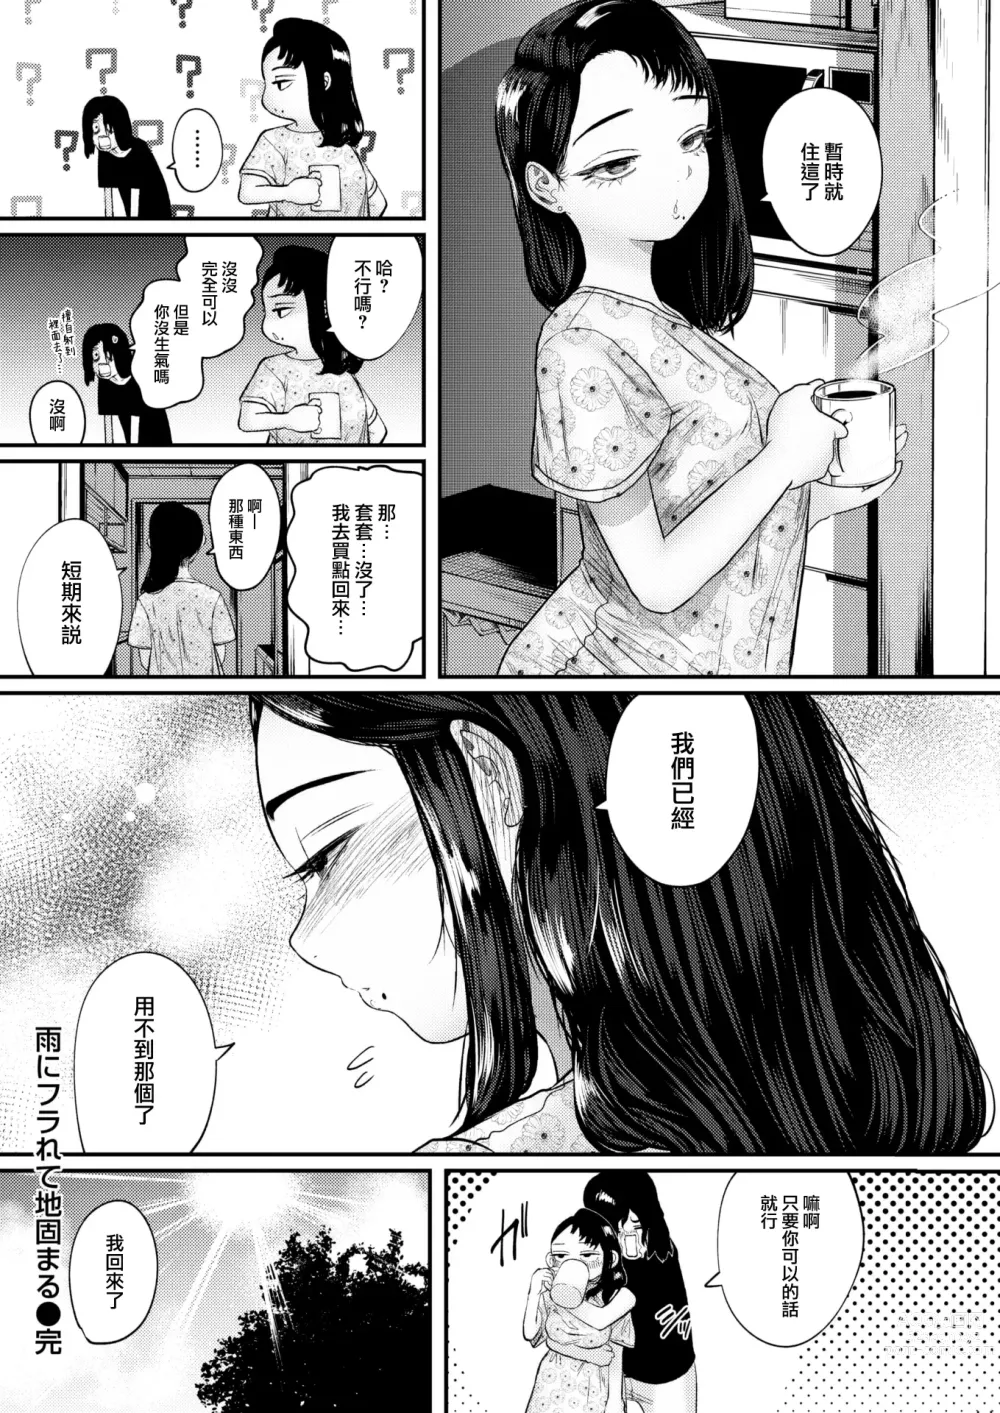 Page 23 of manga Ame ni Furarete Ji Katamaru - After a storm comes a love